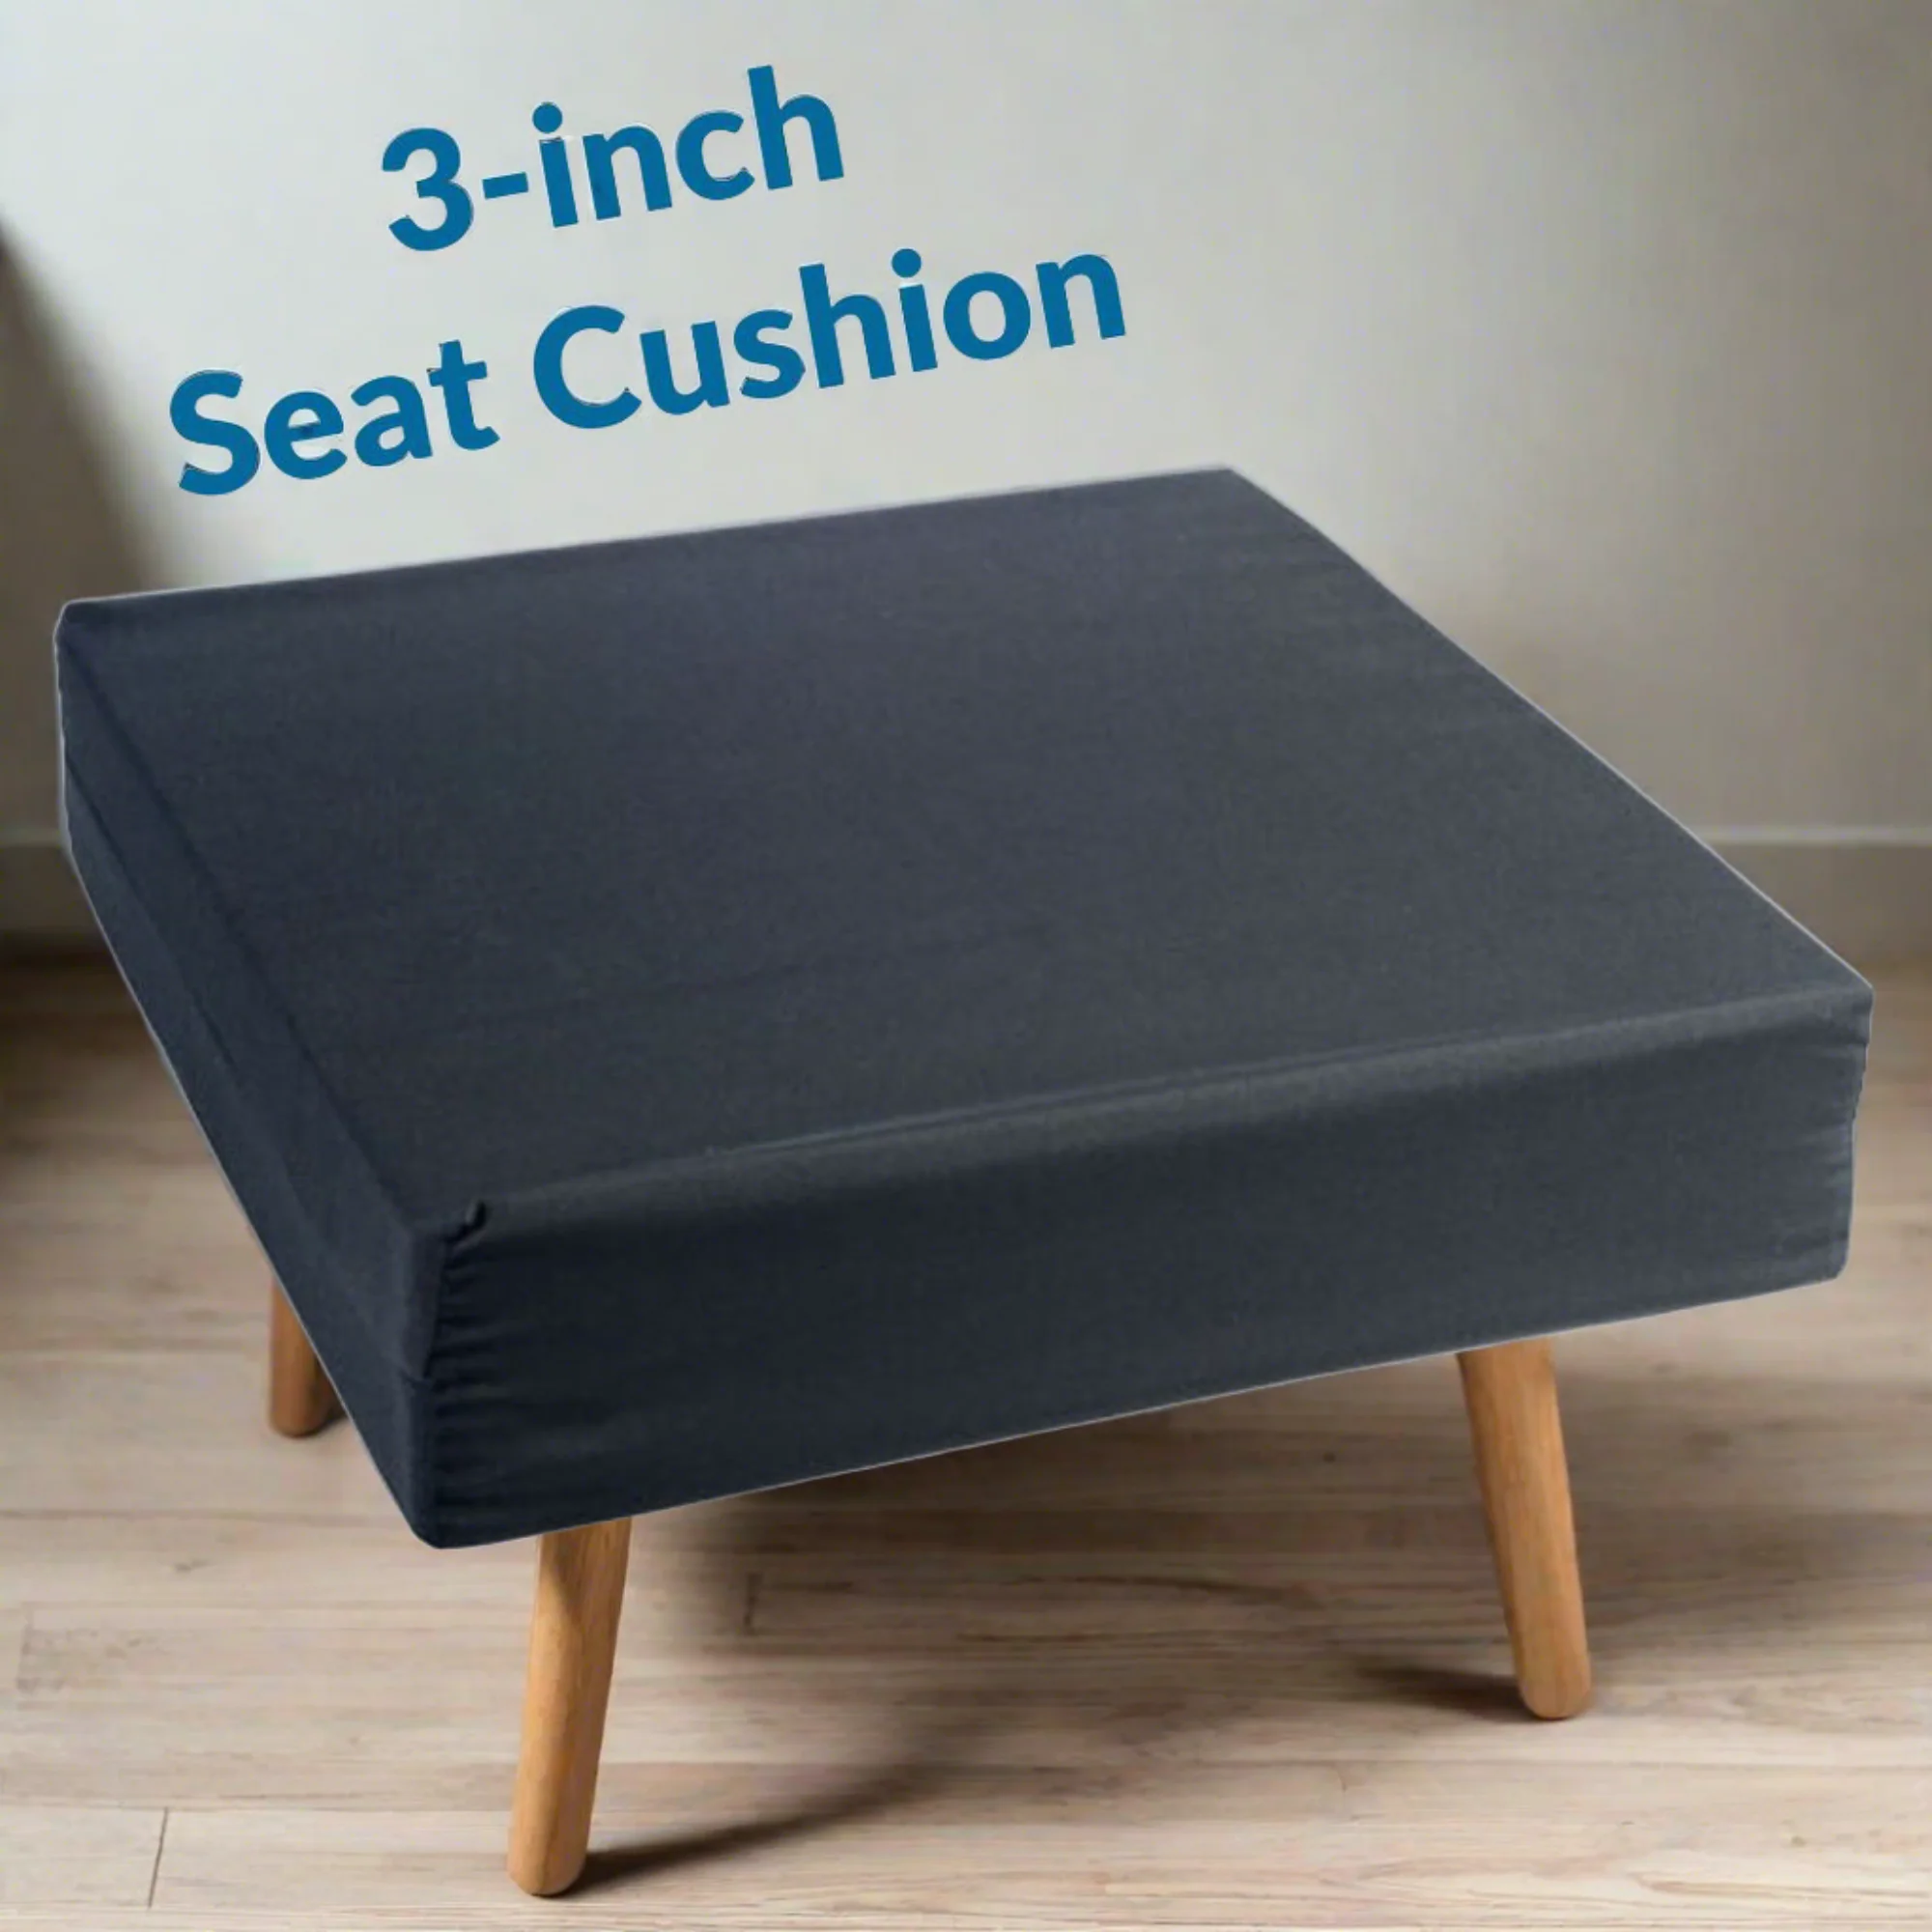 MOBB Ergonomic 3-inch Foam Seat Cushion, 18x16, Pressure Reduction, Wheelchairs - Picture 4 of 12